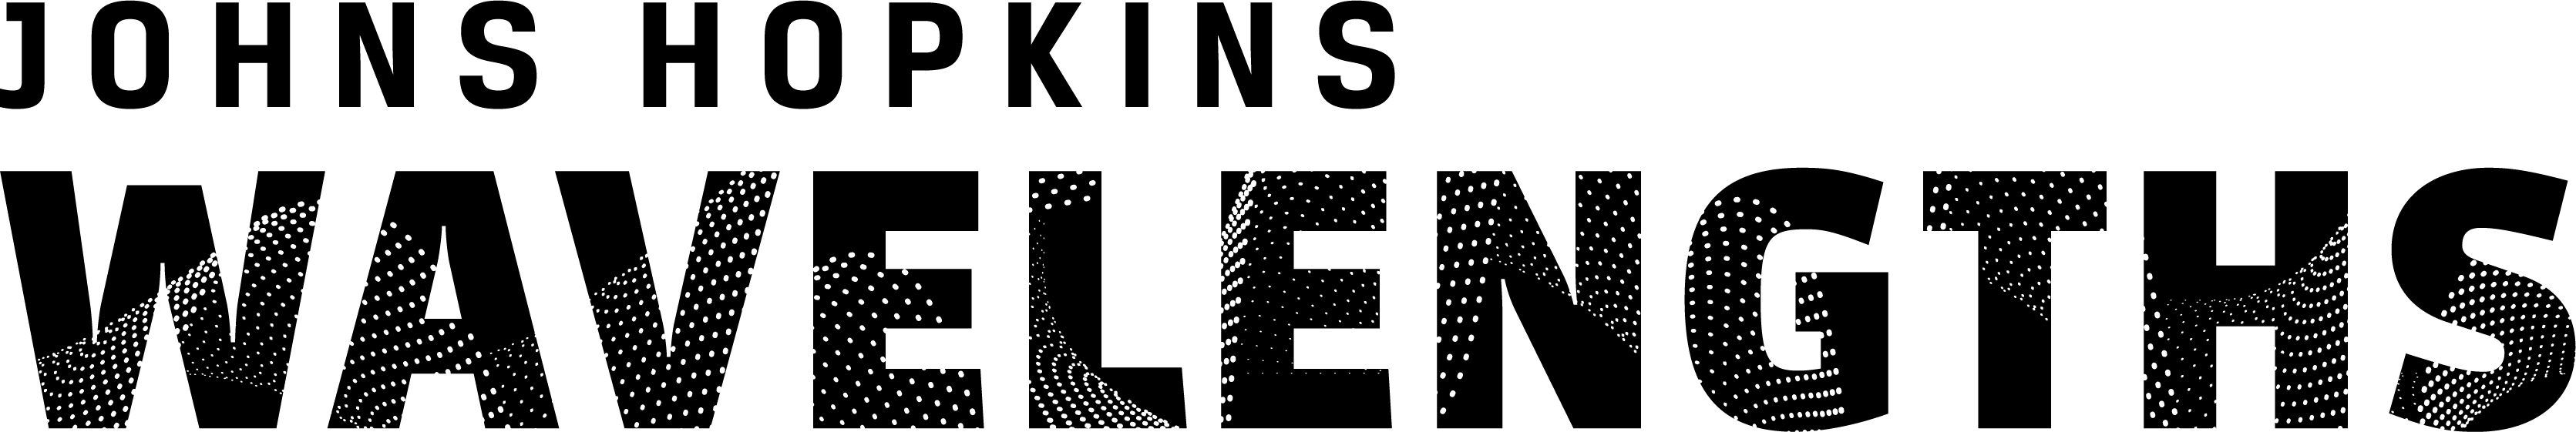 JHU Wavelengths logo